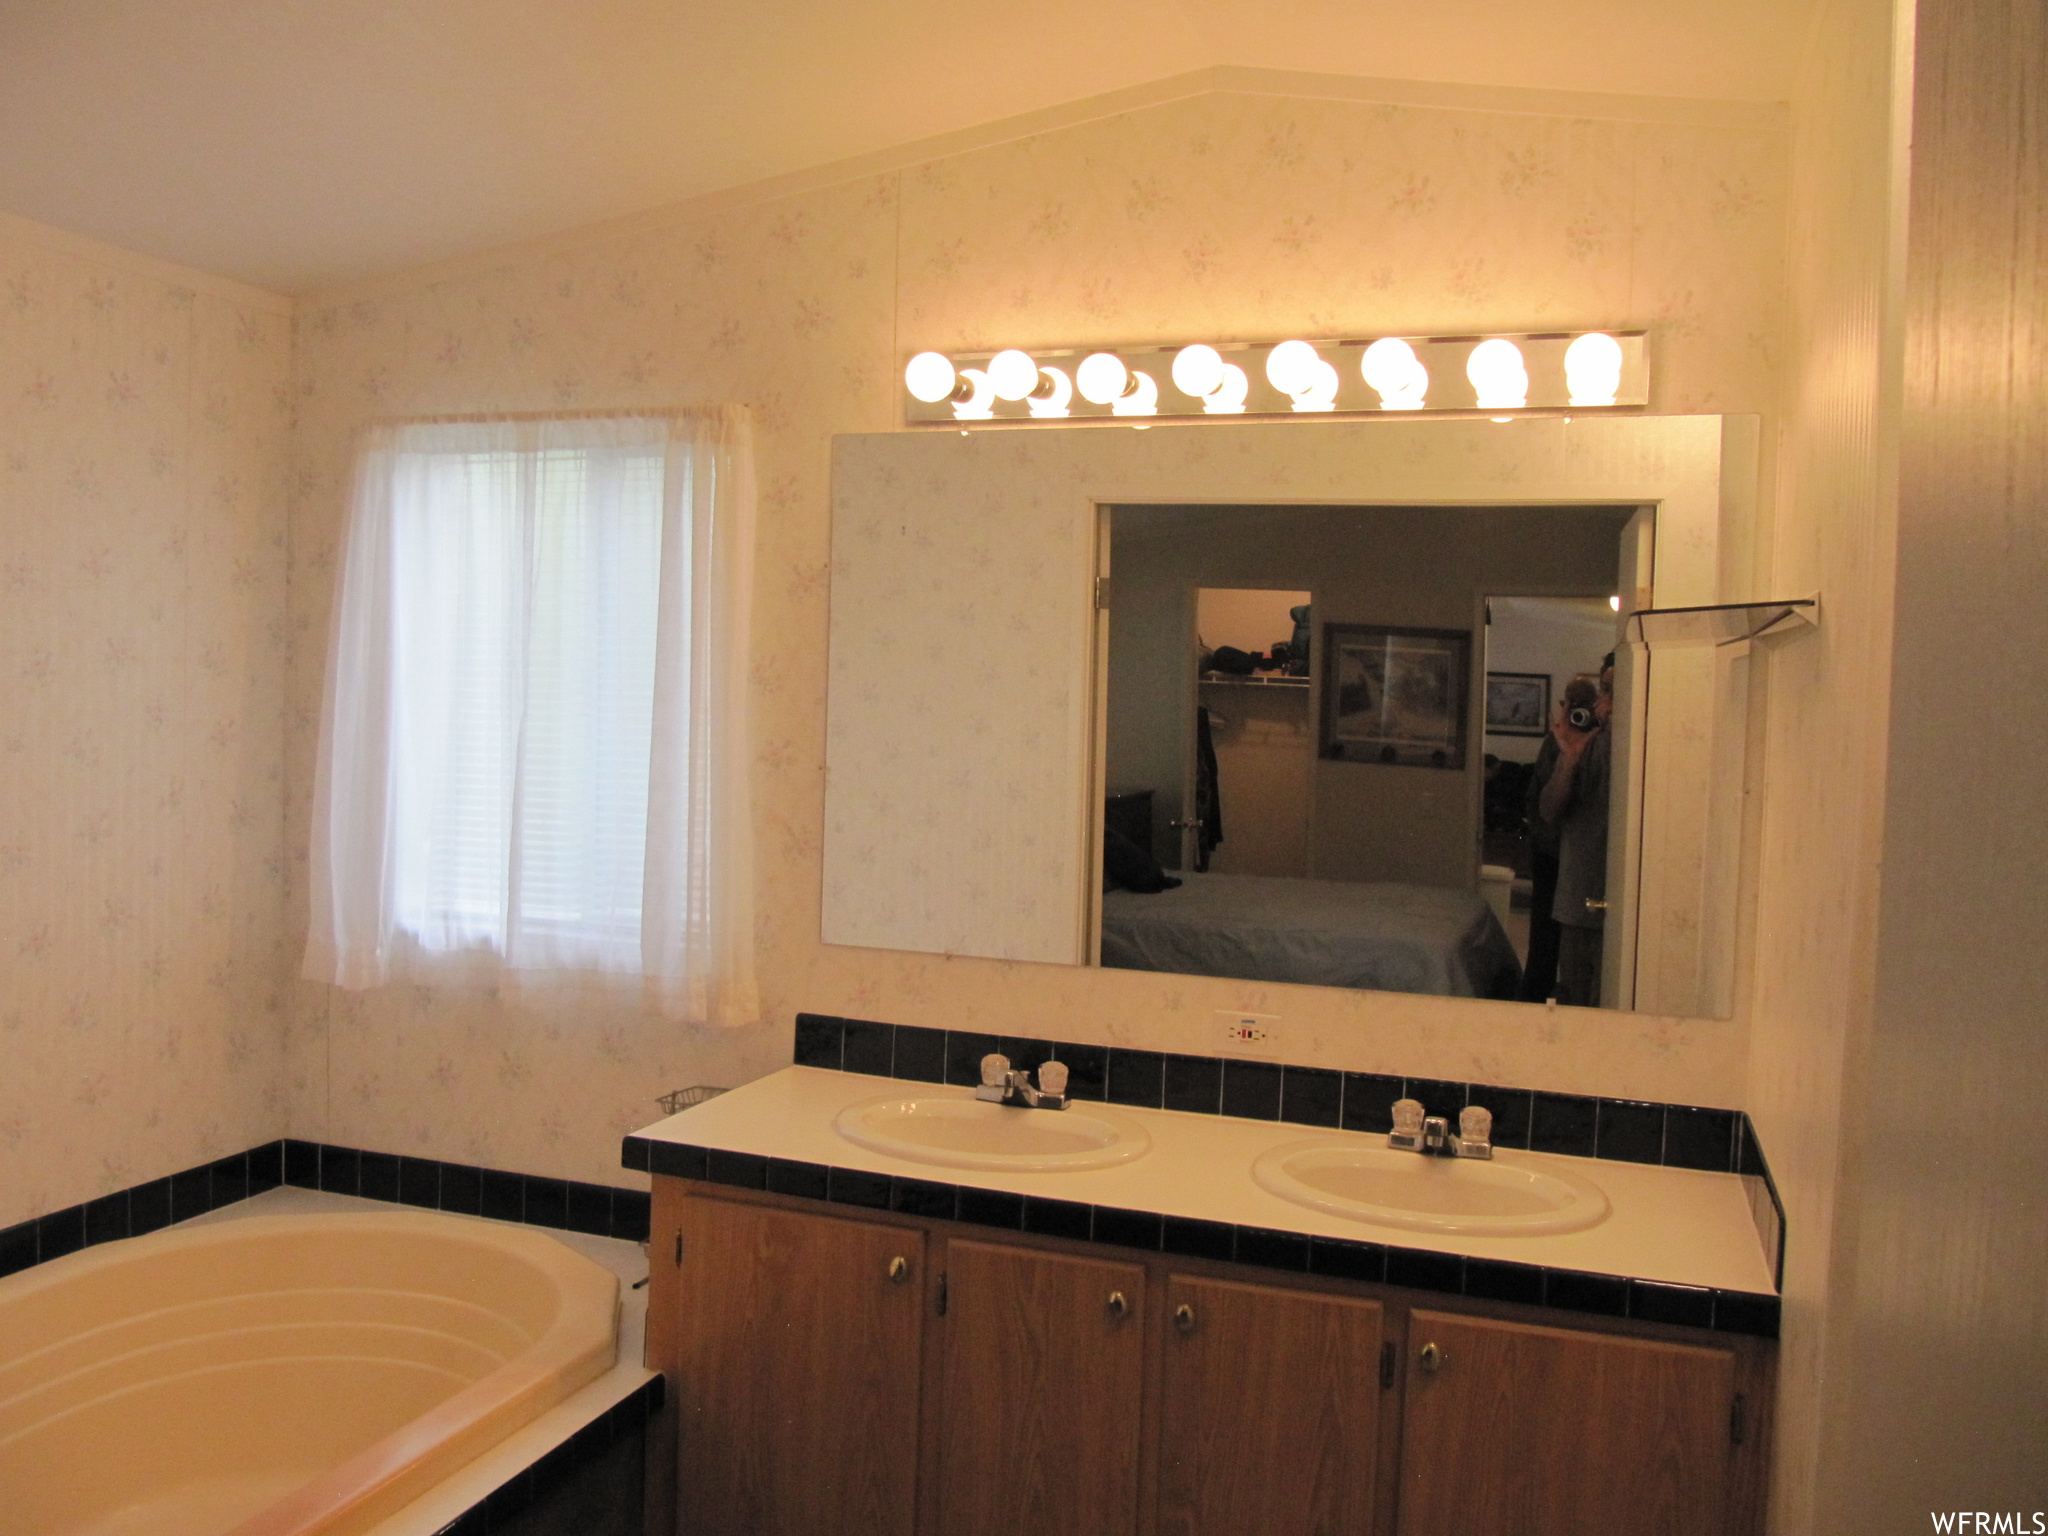 Master Bathroom, mirror, dual vanity, and a bathtub